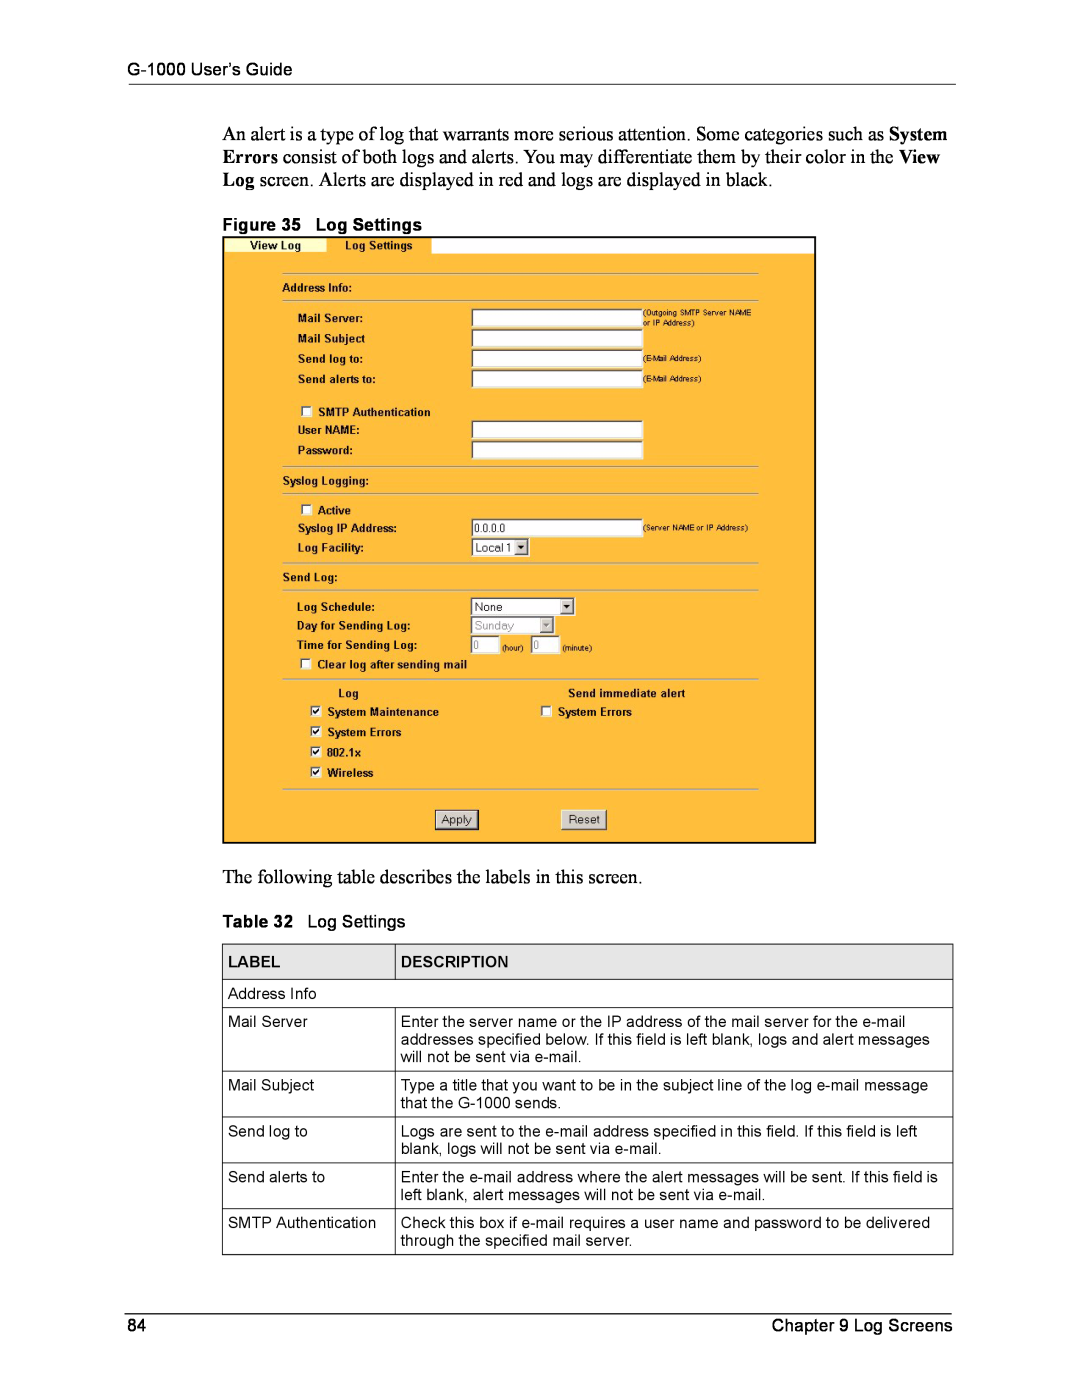 ZyXEL Communications manual G-1000 User’s Guide, Log Settings, Log Screens, Label, Description 